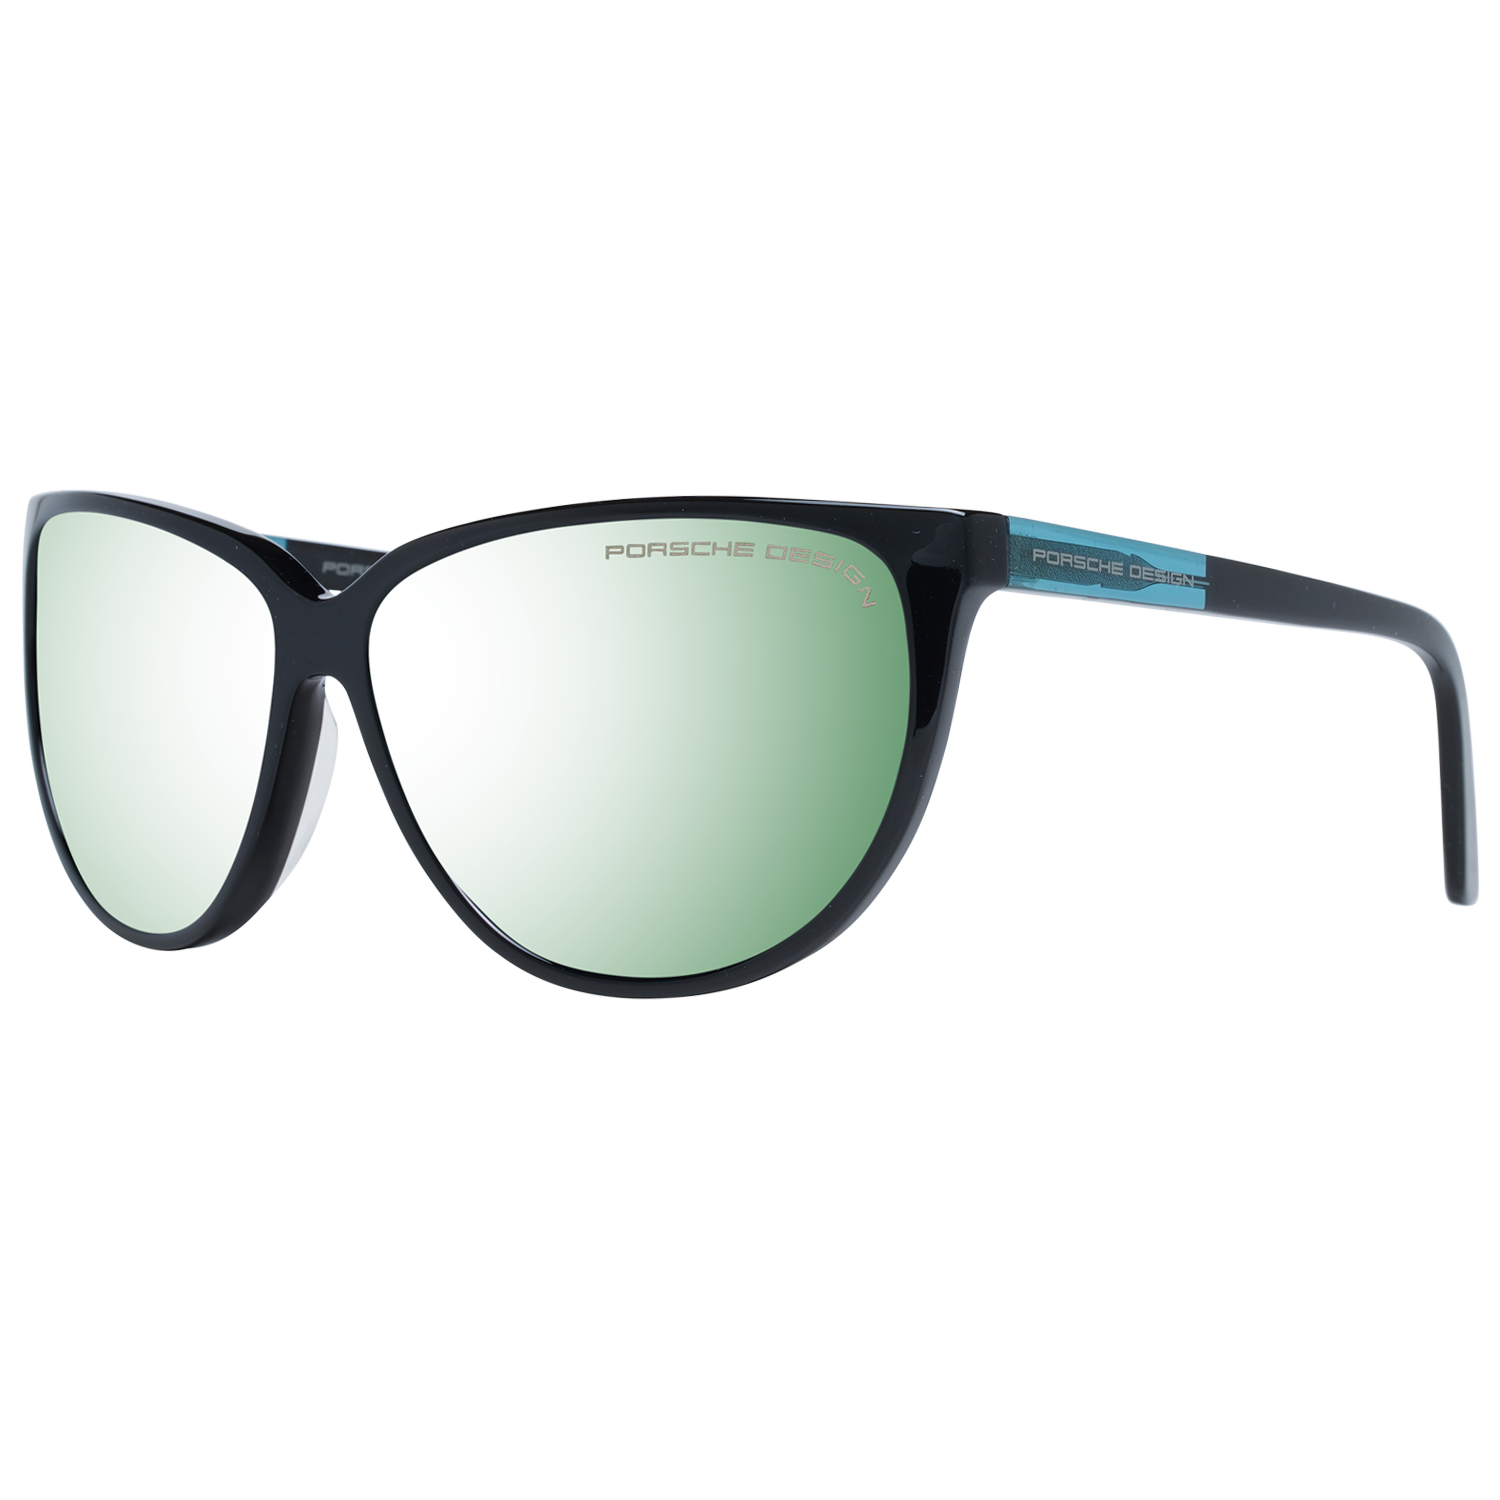 Porsche Design Sunglasses Porsche Design Sunglasses P8588 A 61 Eyeglasses Eyewear UK USA Australia 